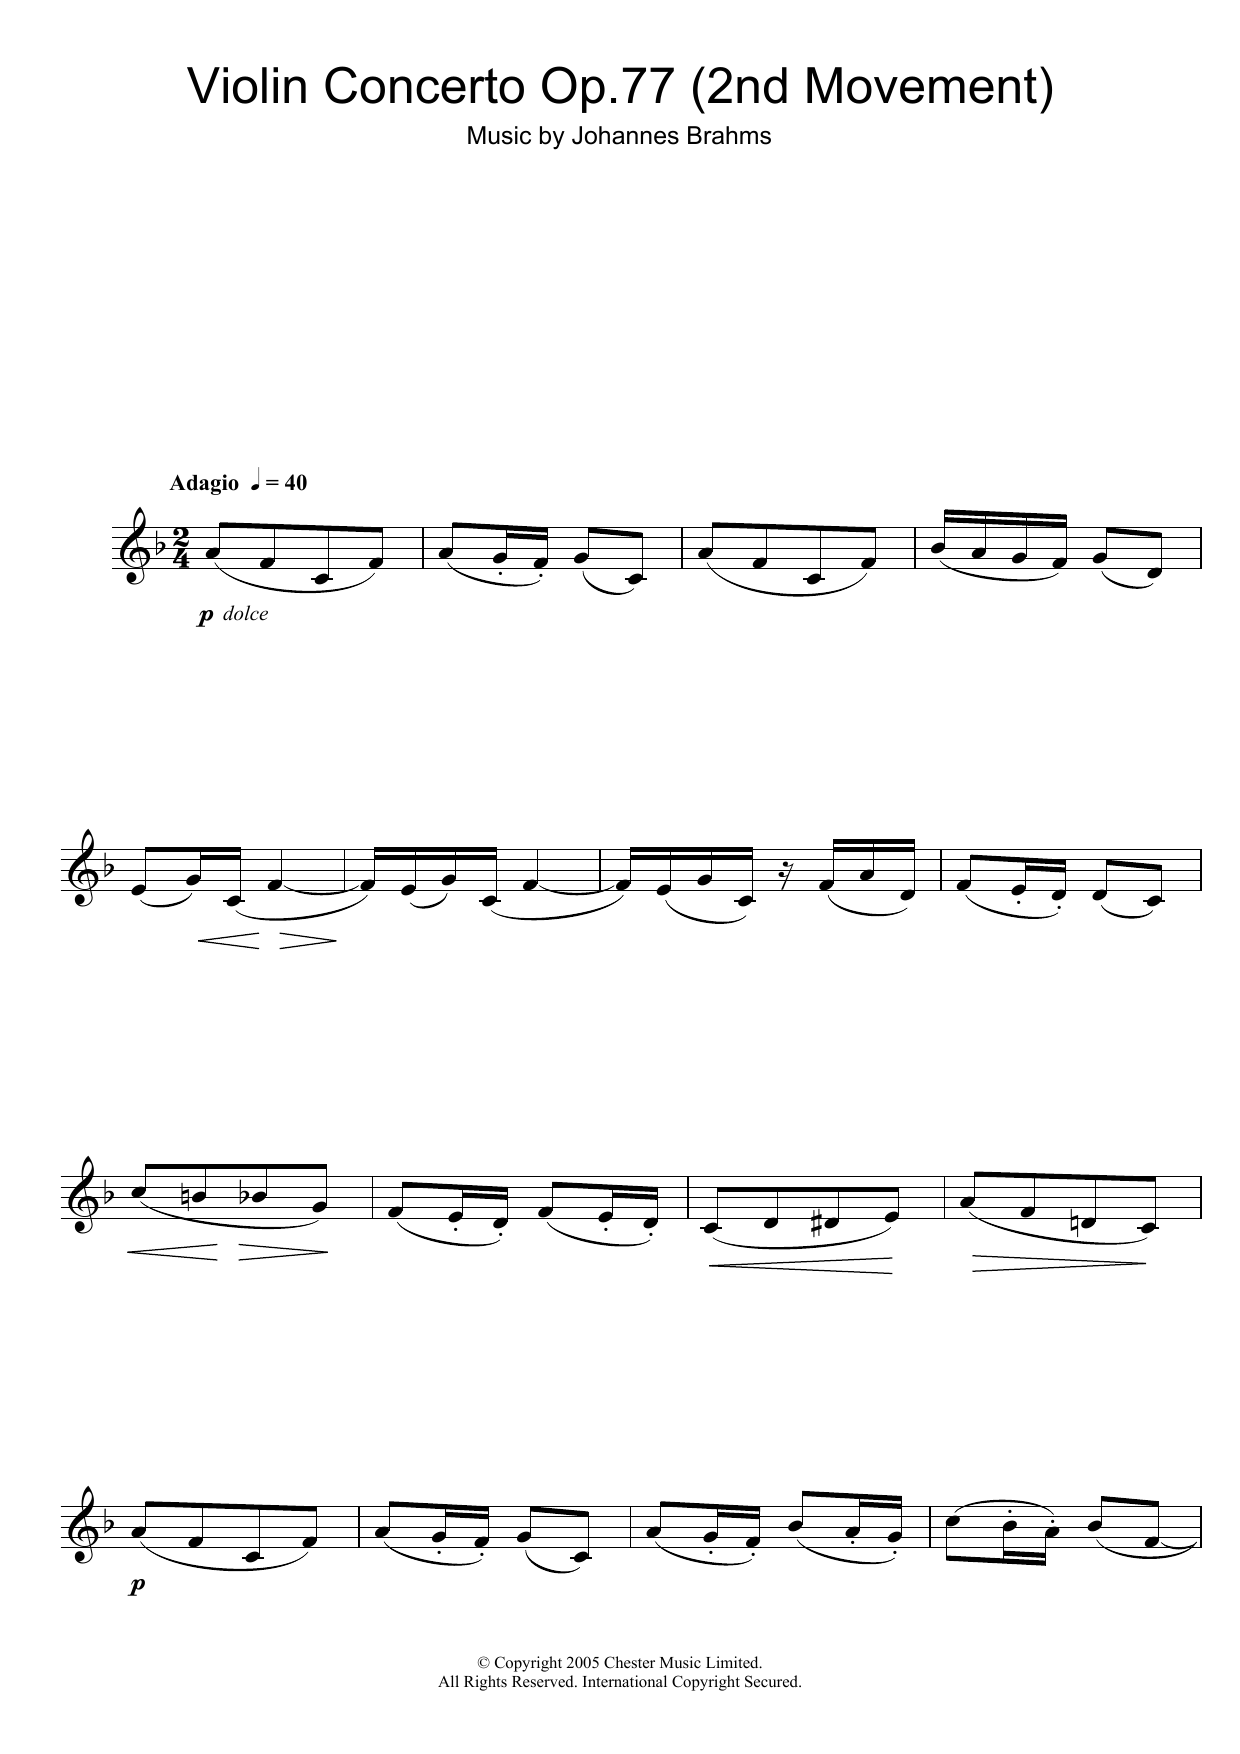 Johannes Brahms Violin Concerto (2nd Movement) Sheet Music Notes & Chords for Alto Saxophone - Download or Print PDF